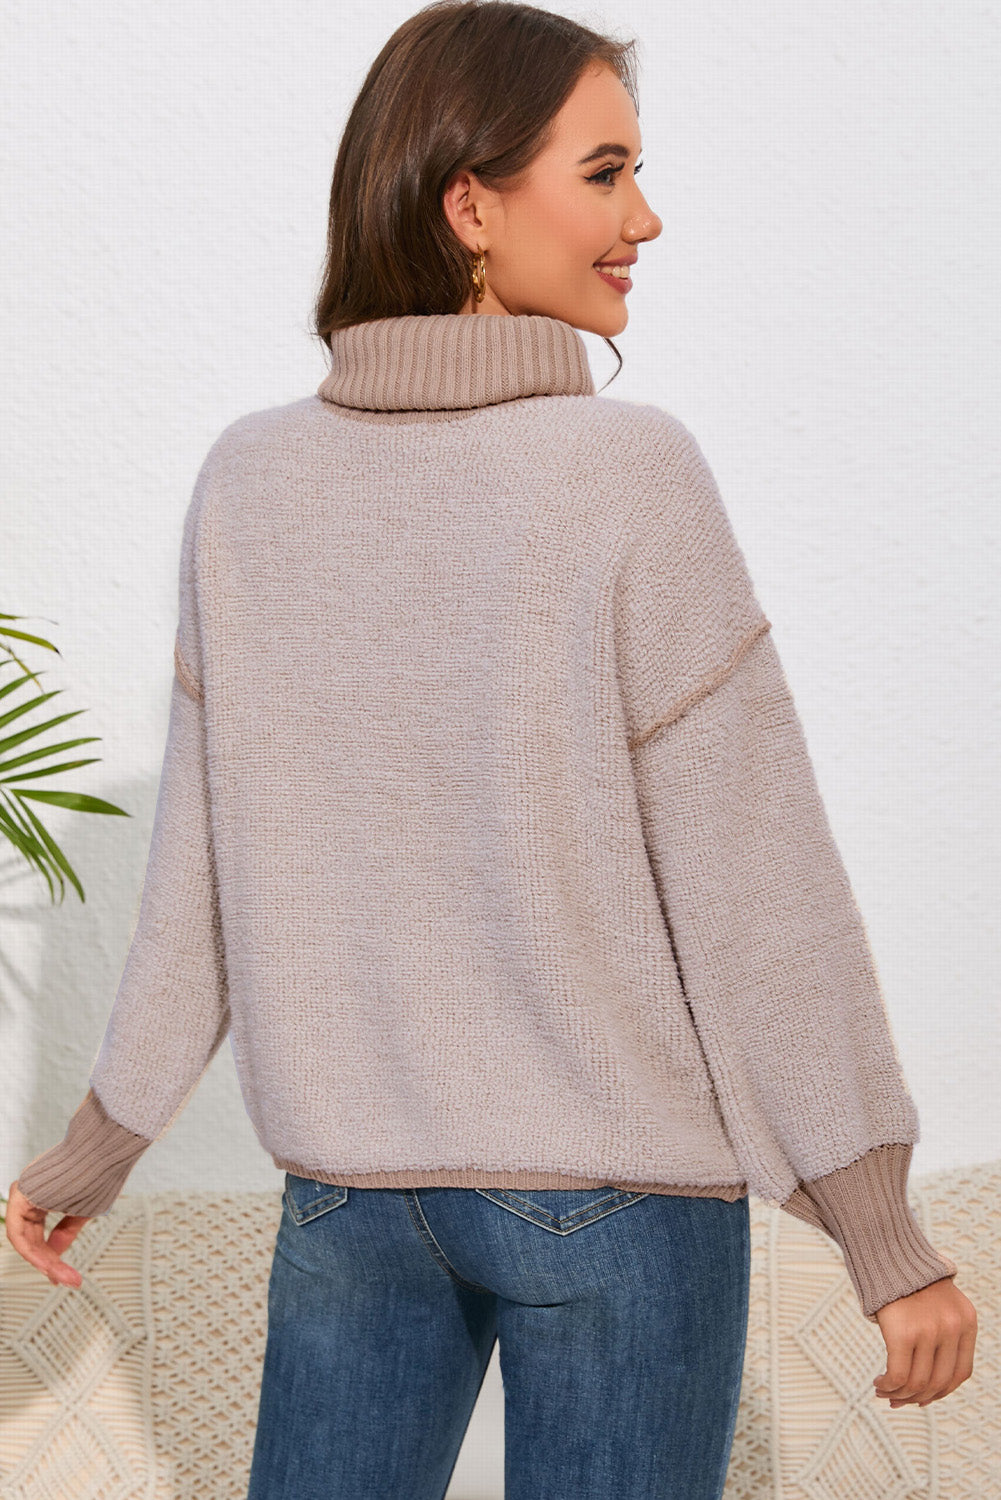 Fall Forward Sweater